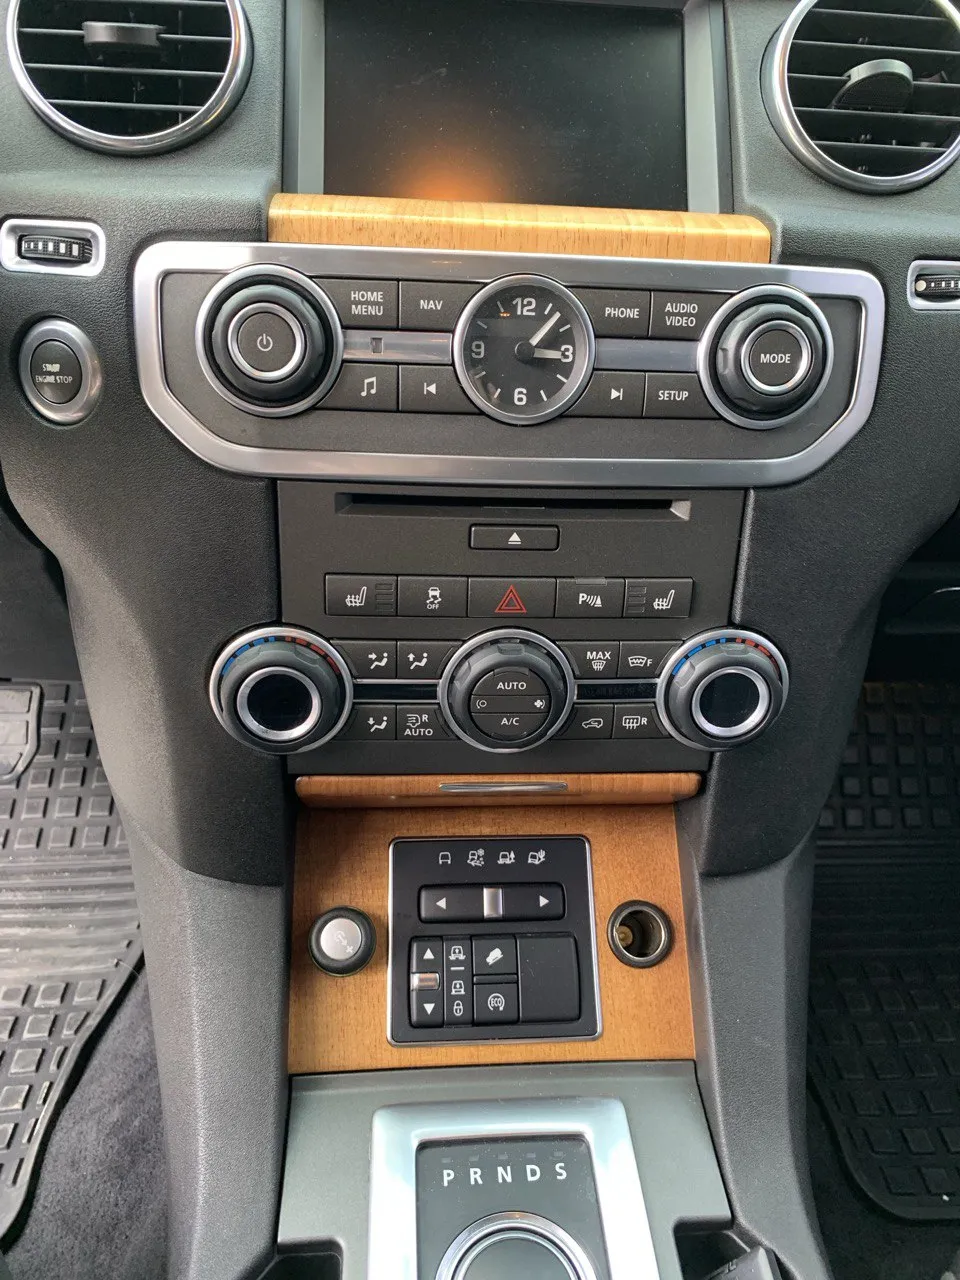 Land Rover Discovery IV 2014 купити авто в лізинг